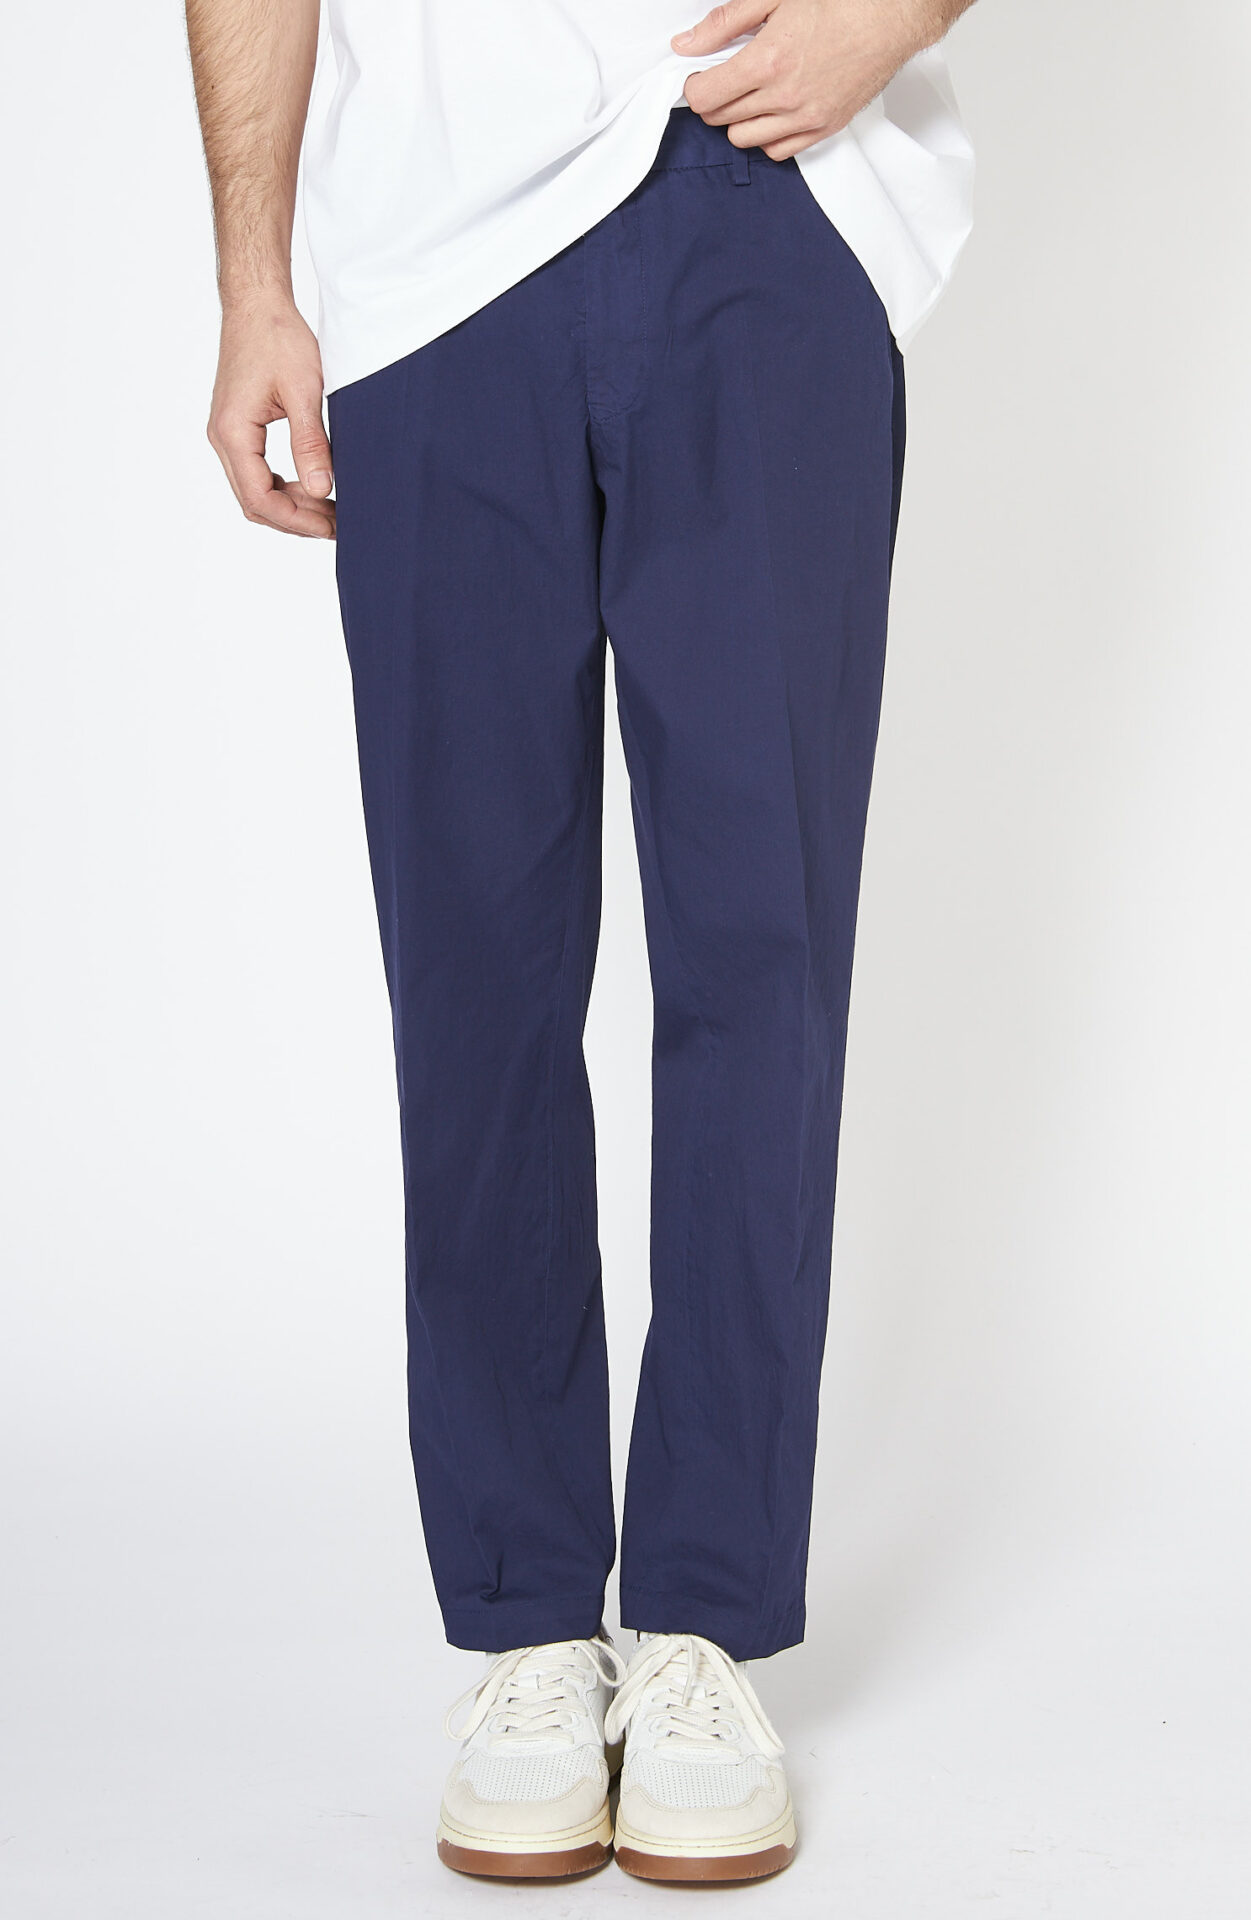 Dries van Noten - Dark blue trousers 